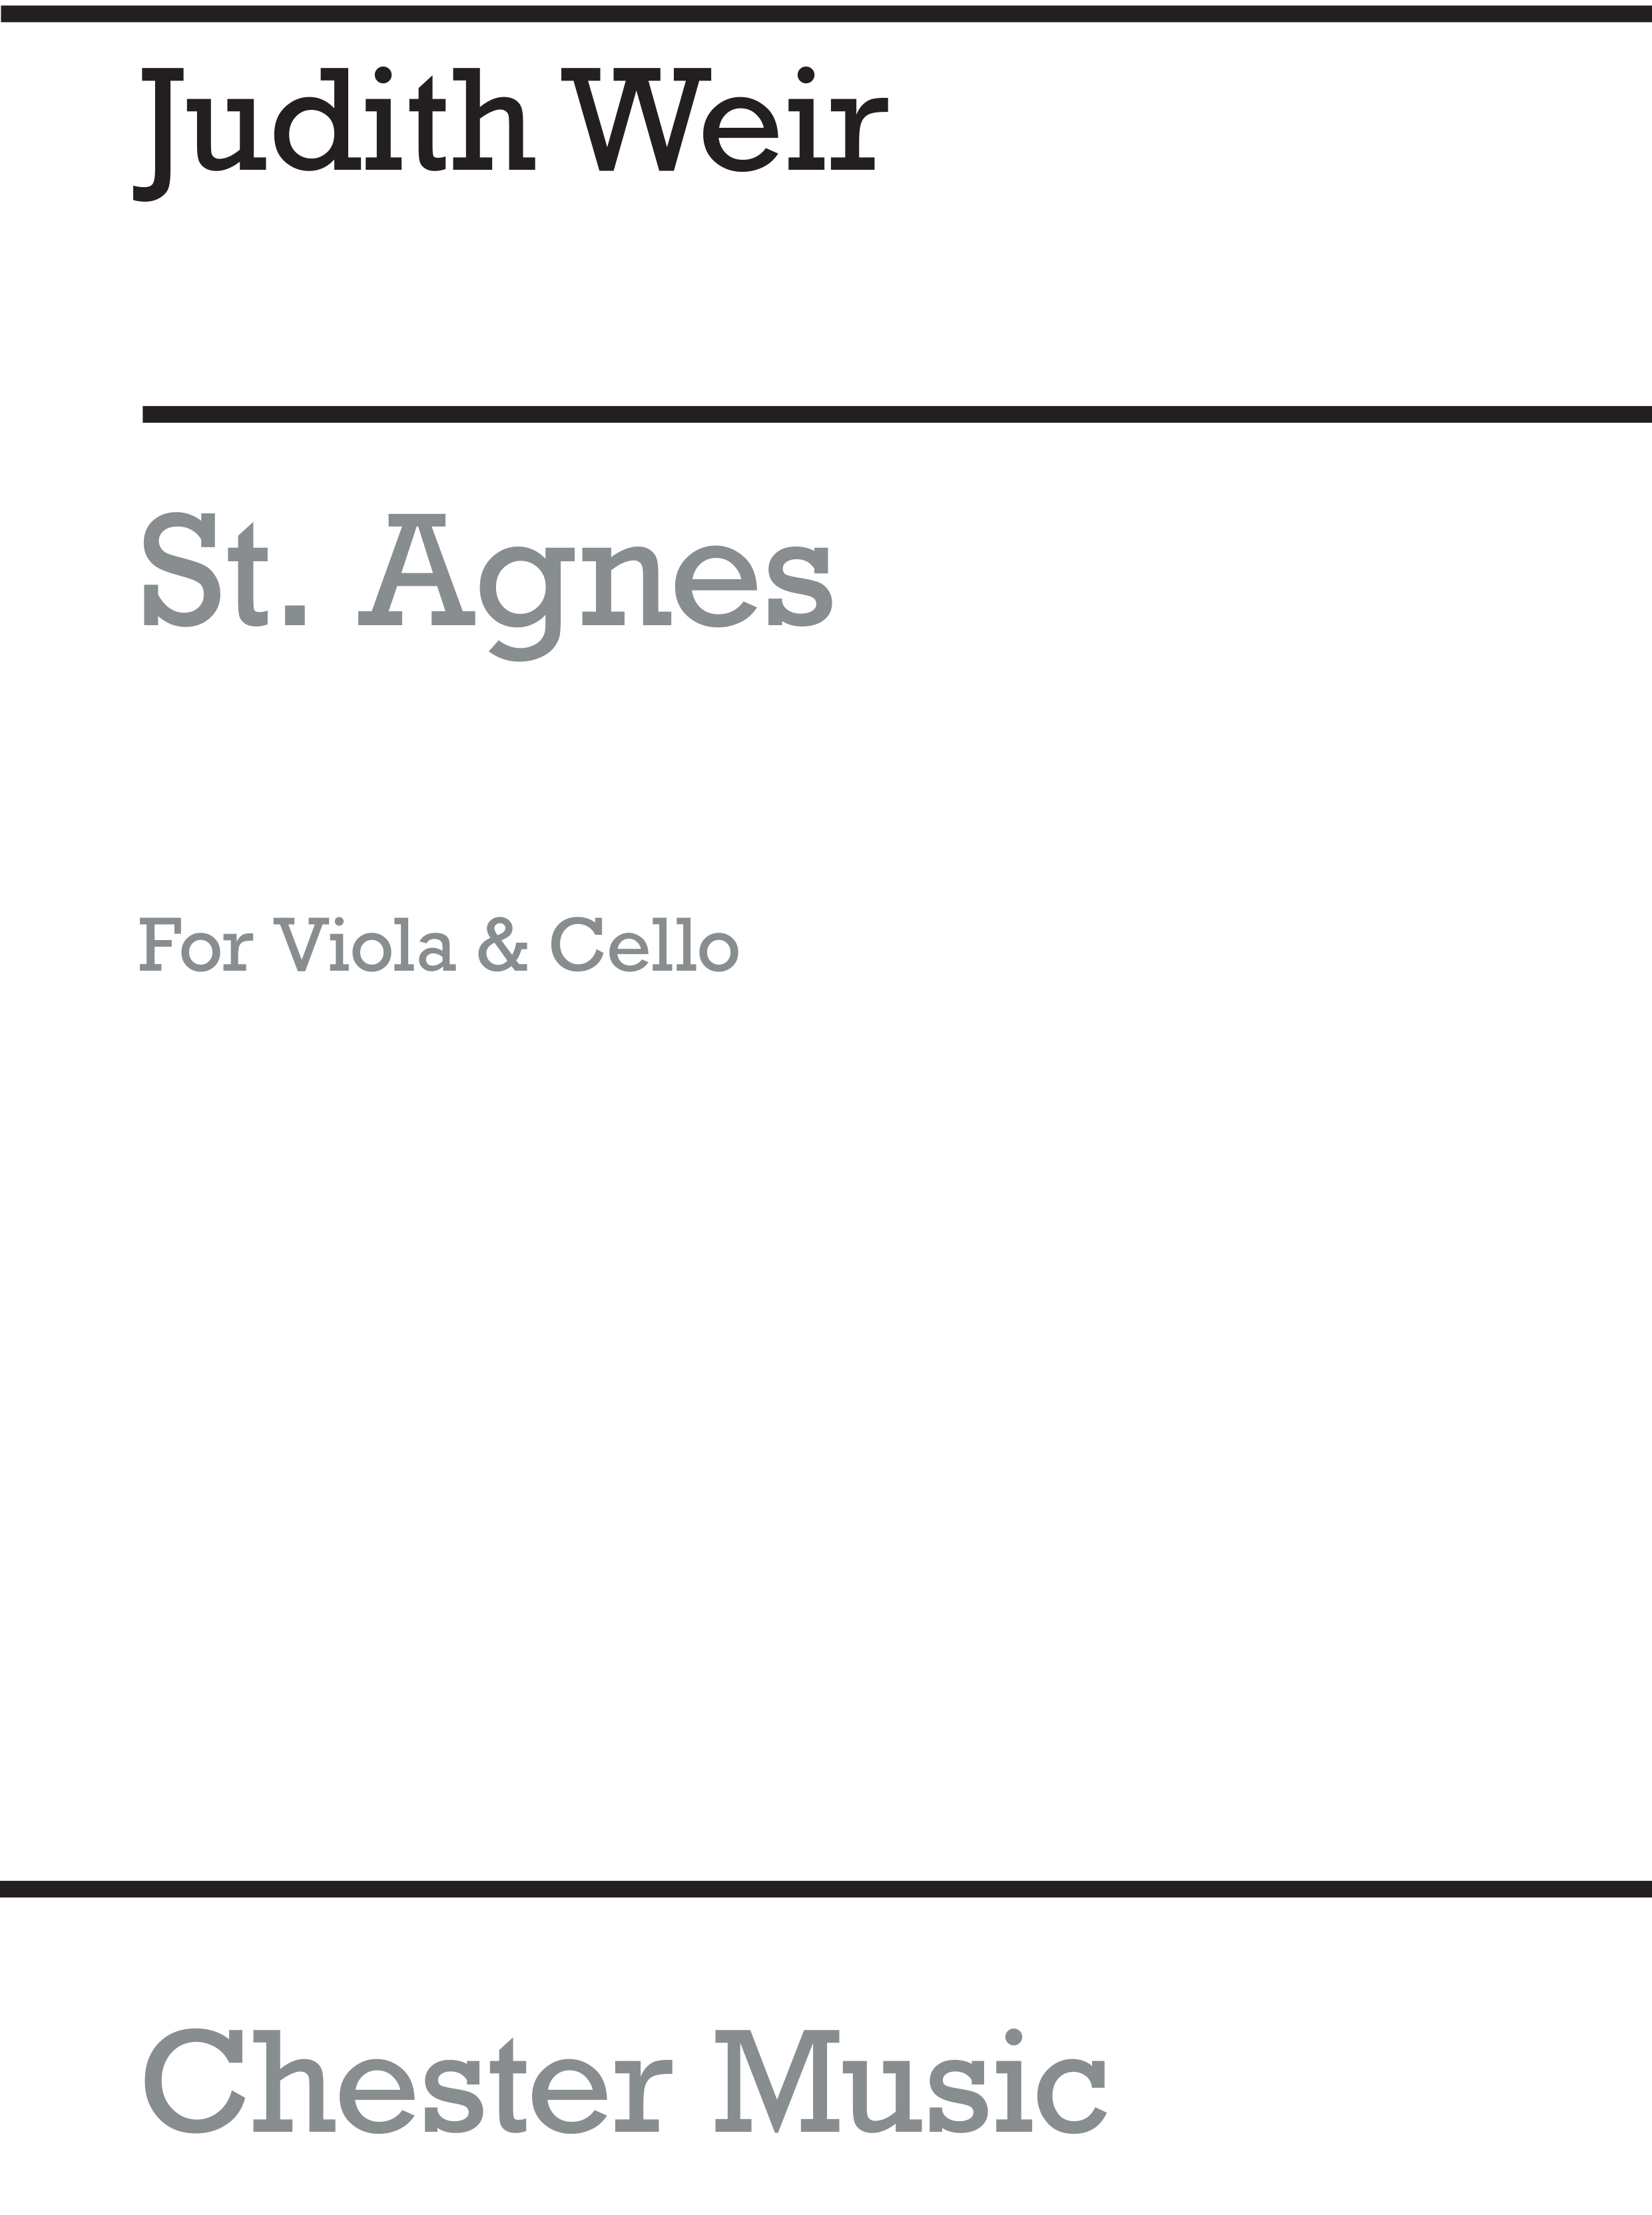 Judith Weir: St. Agnes